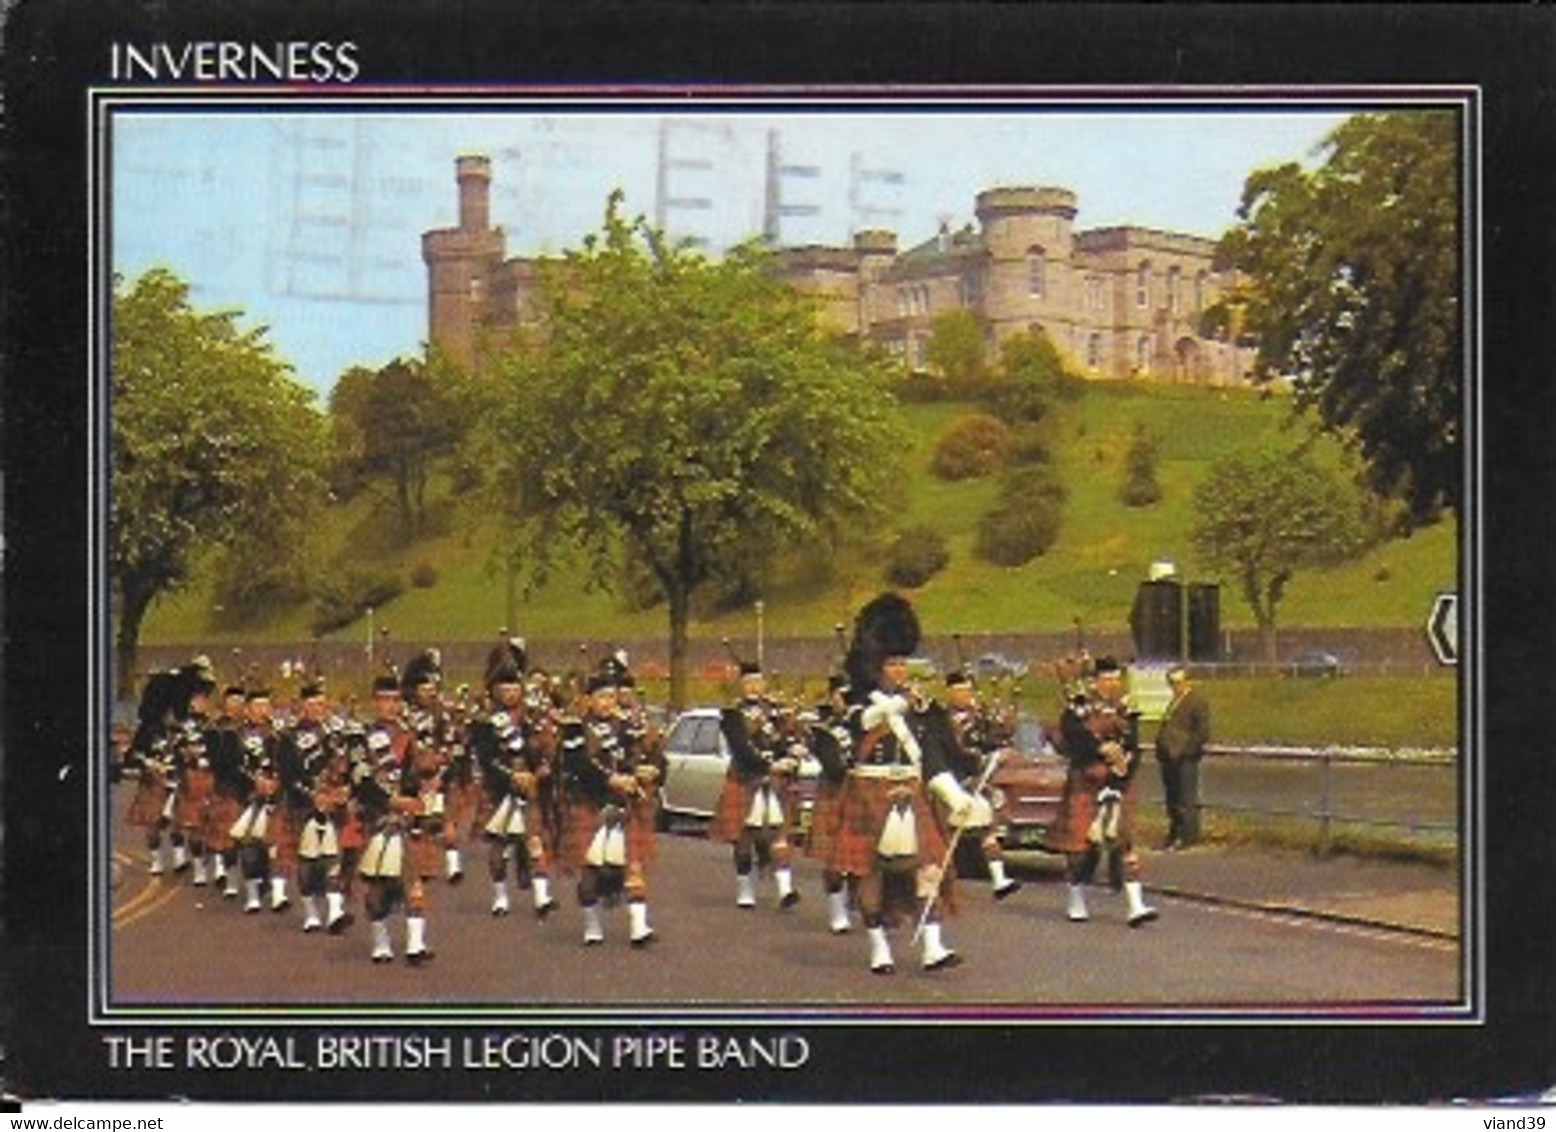 The Royal British Legion Pipe Band - Inverness-shire